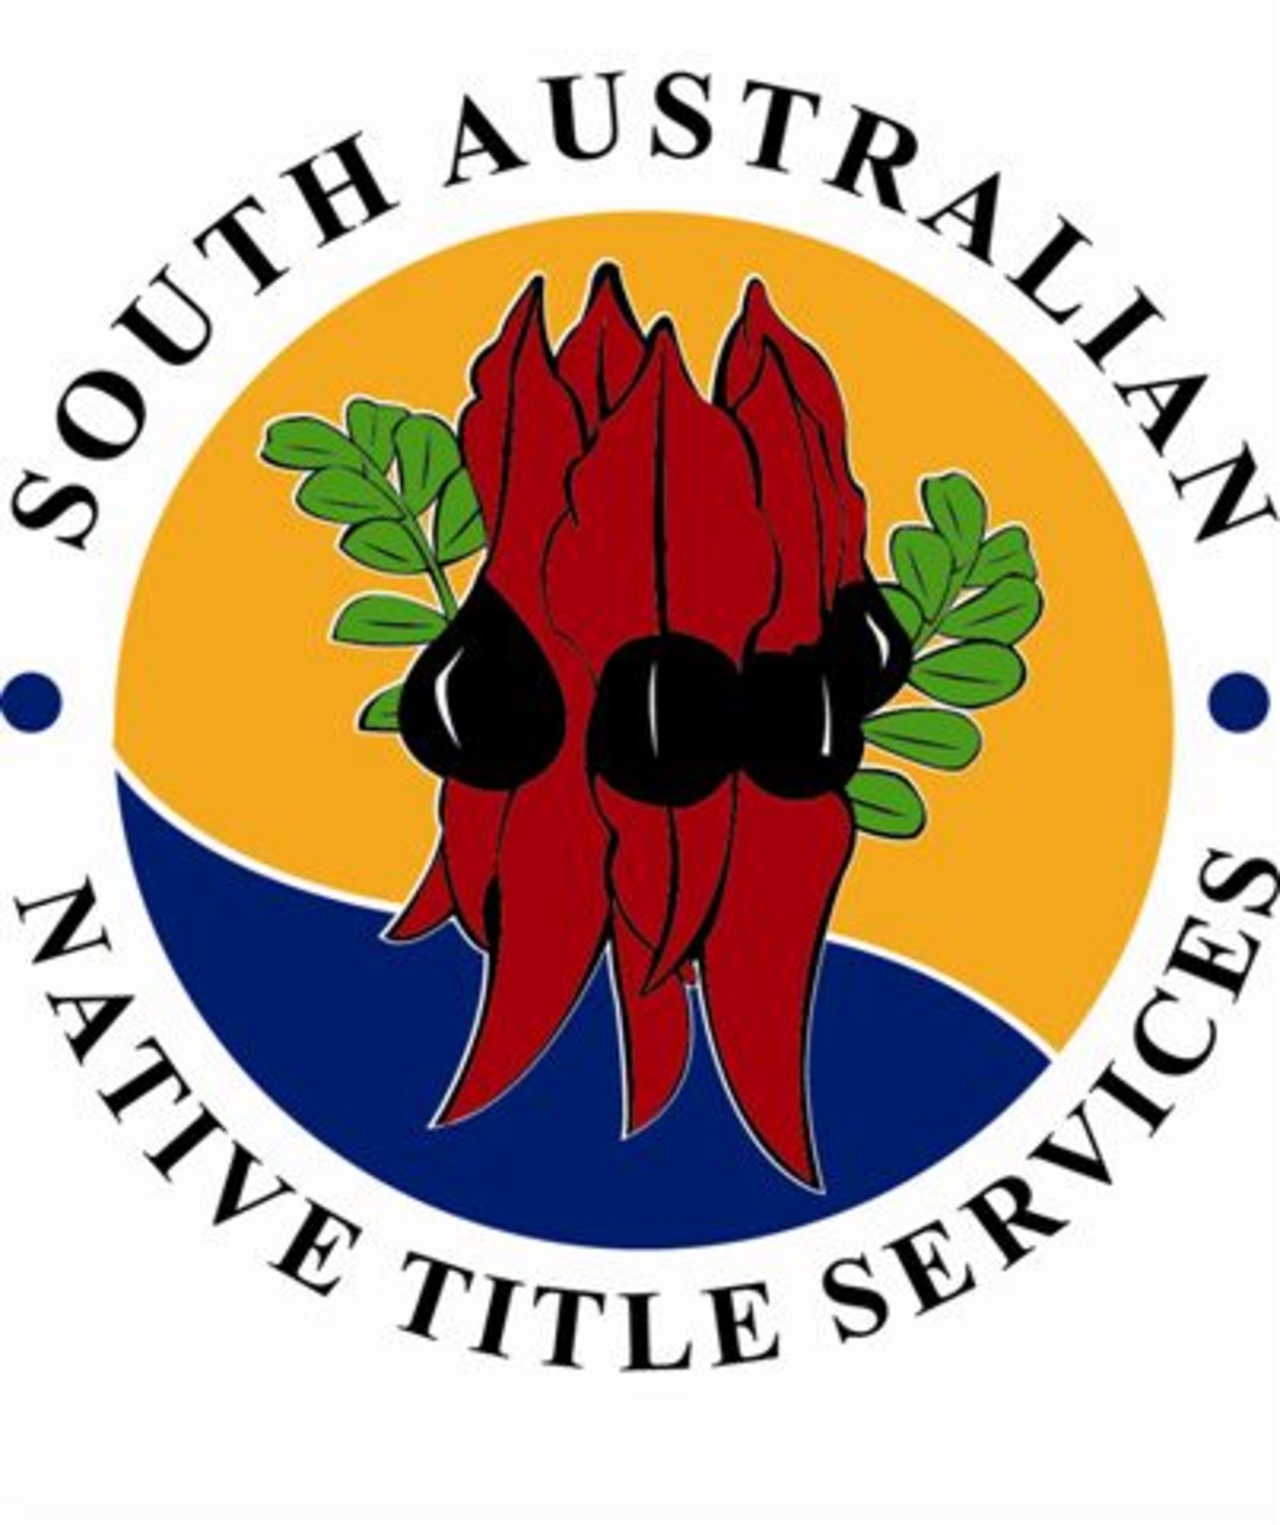 South Australian Native Title Services logo